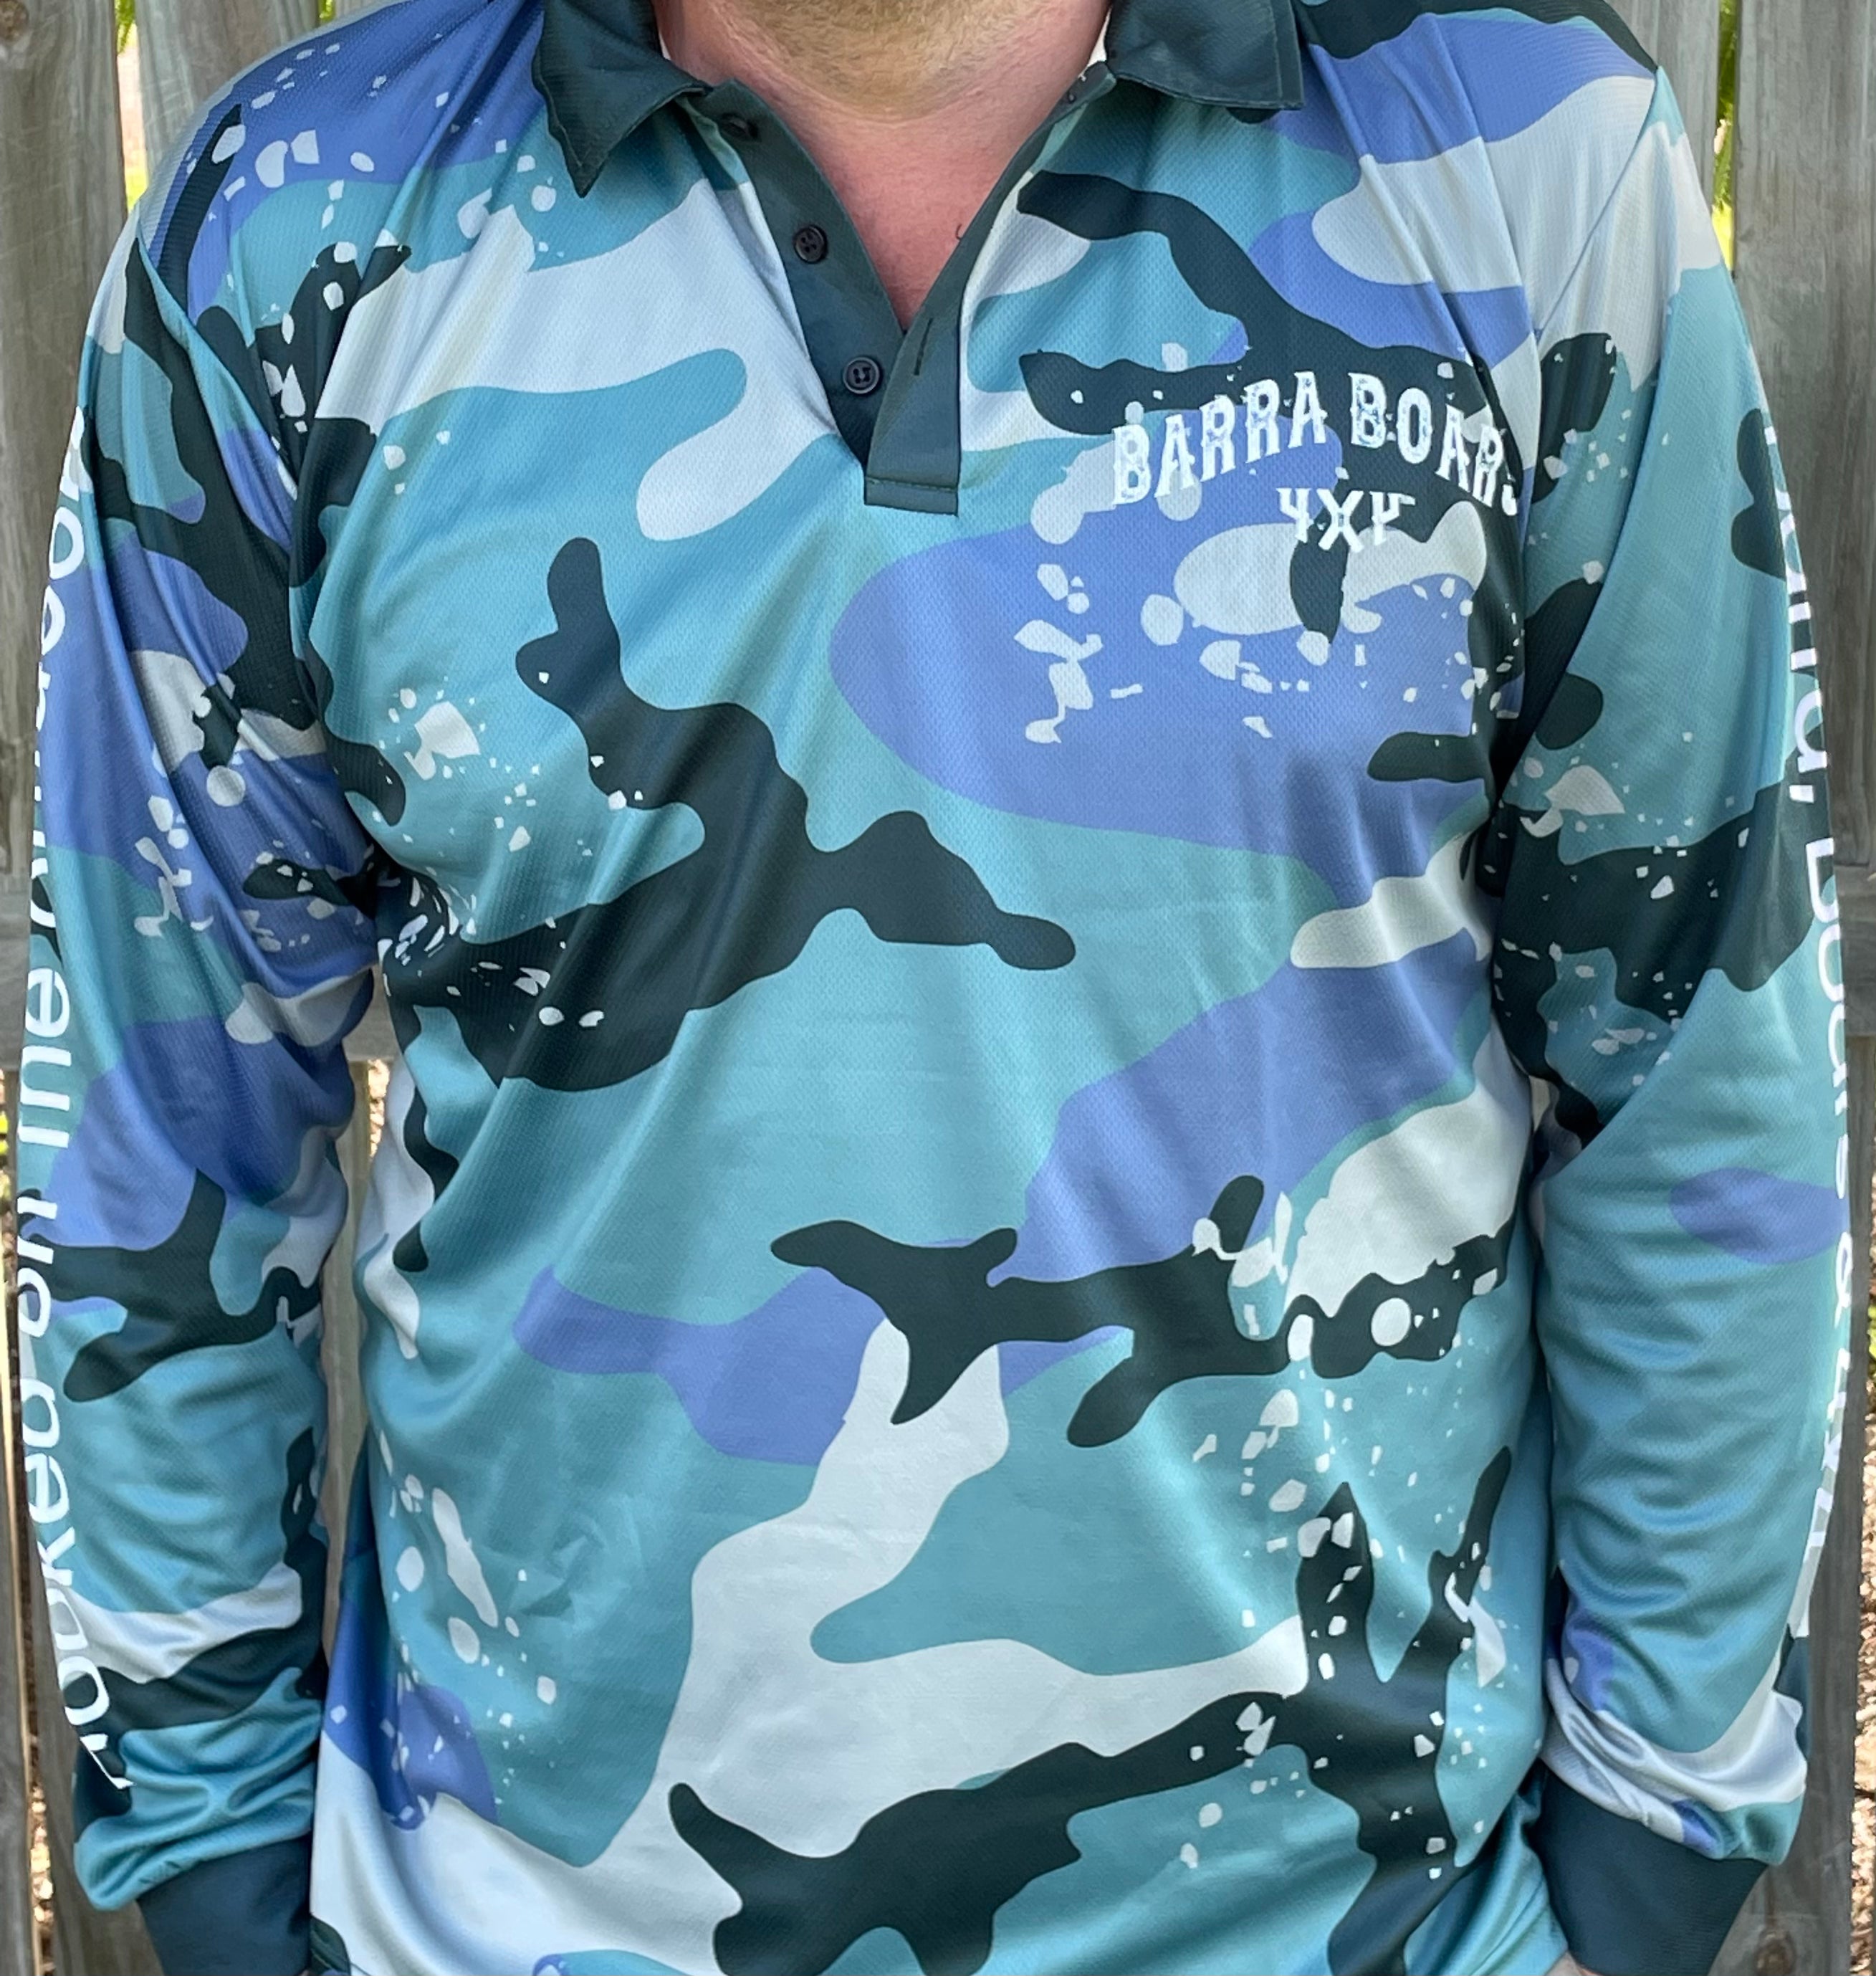 Barra, Boars & 4x4 camo fishing shirt – Barra, boars & 4x4